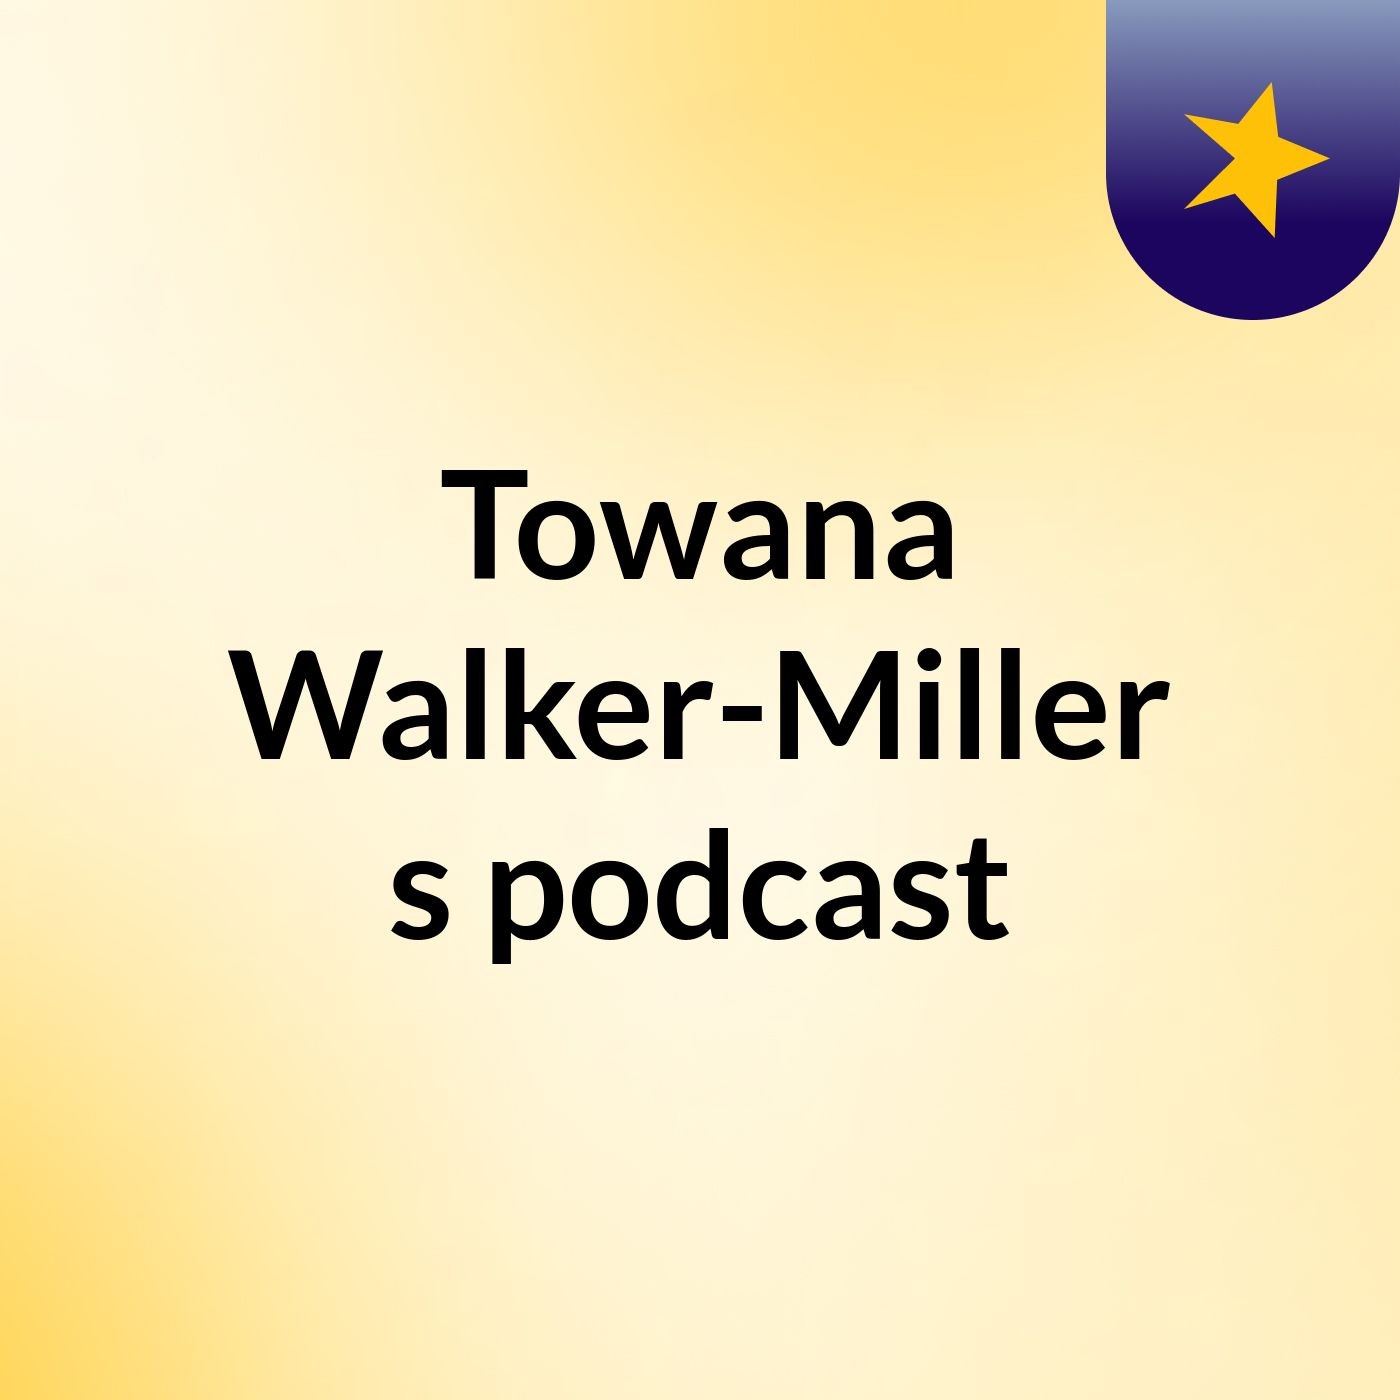 Towana Walker-Miller's podcast